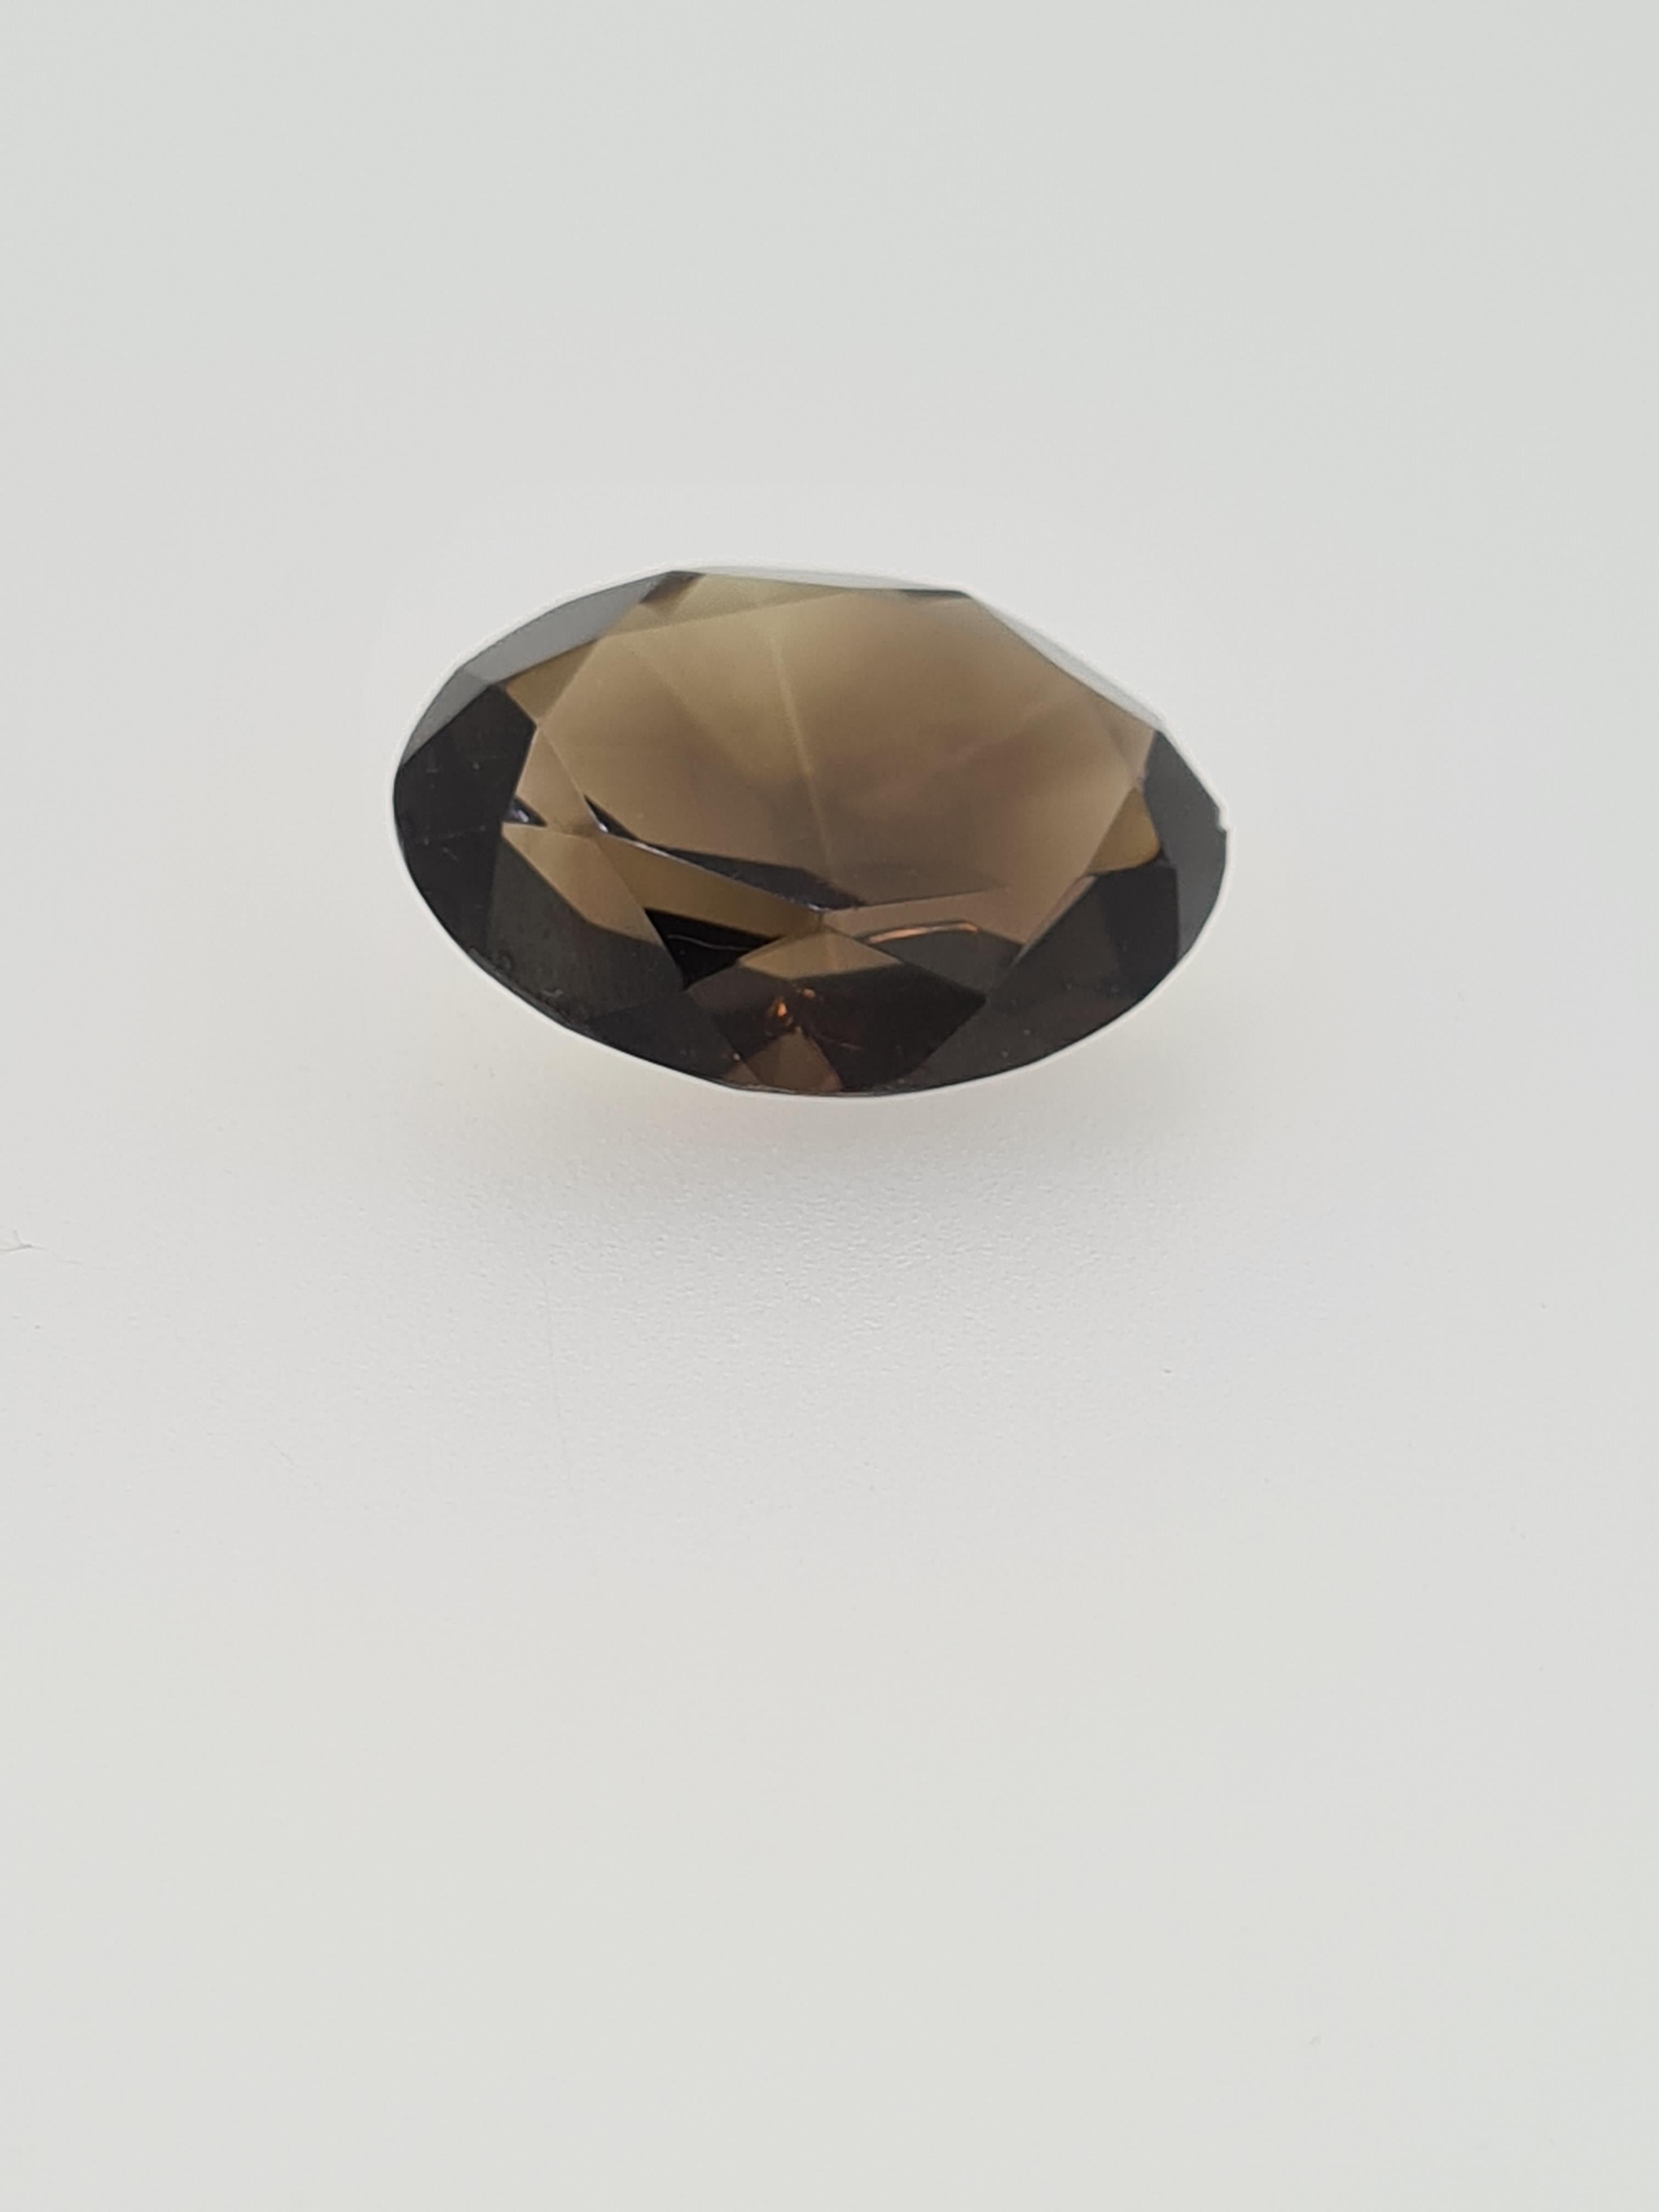 Smokey quartz oval cut gem stone - Image 4 of 4